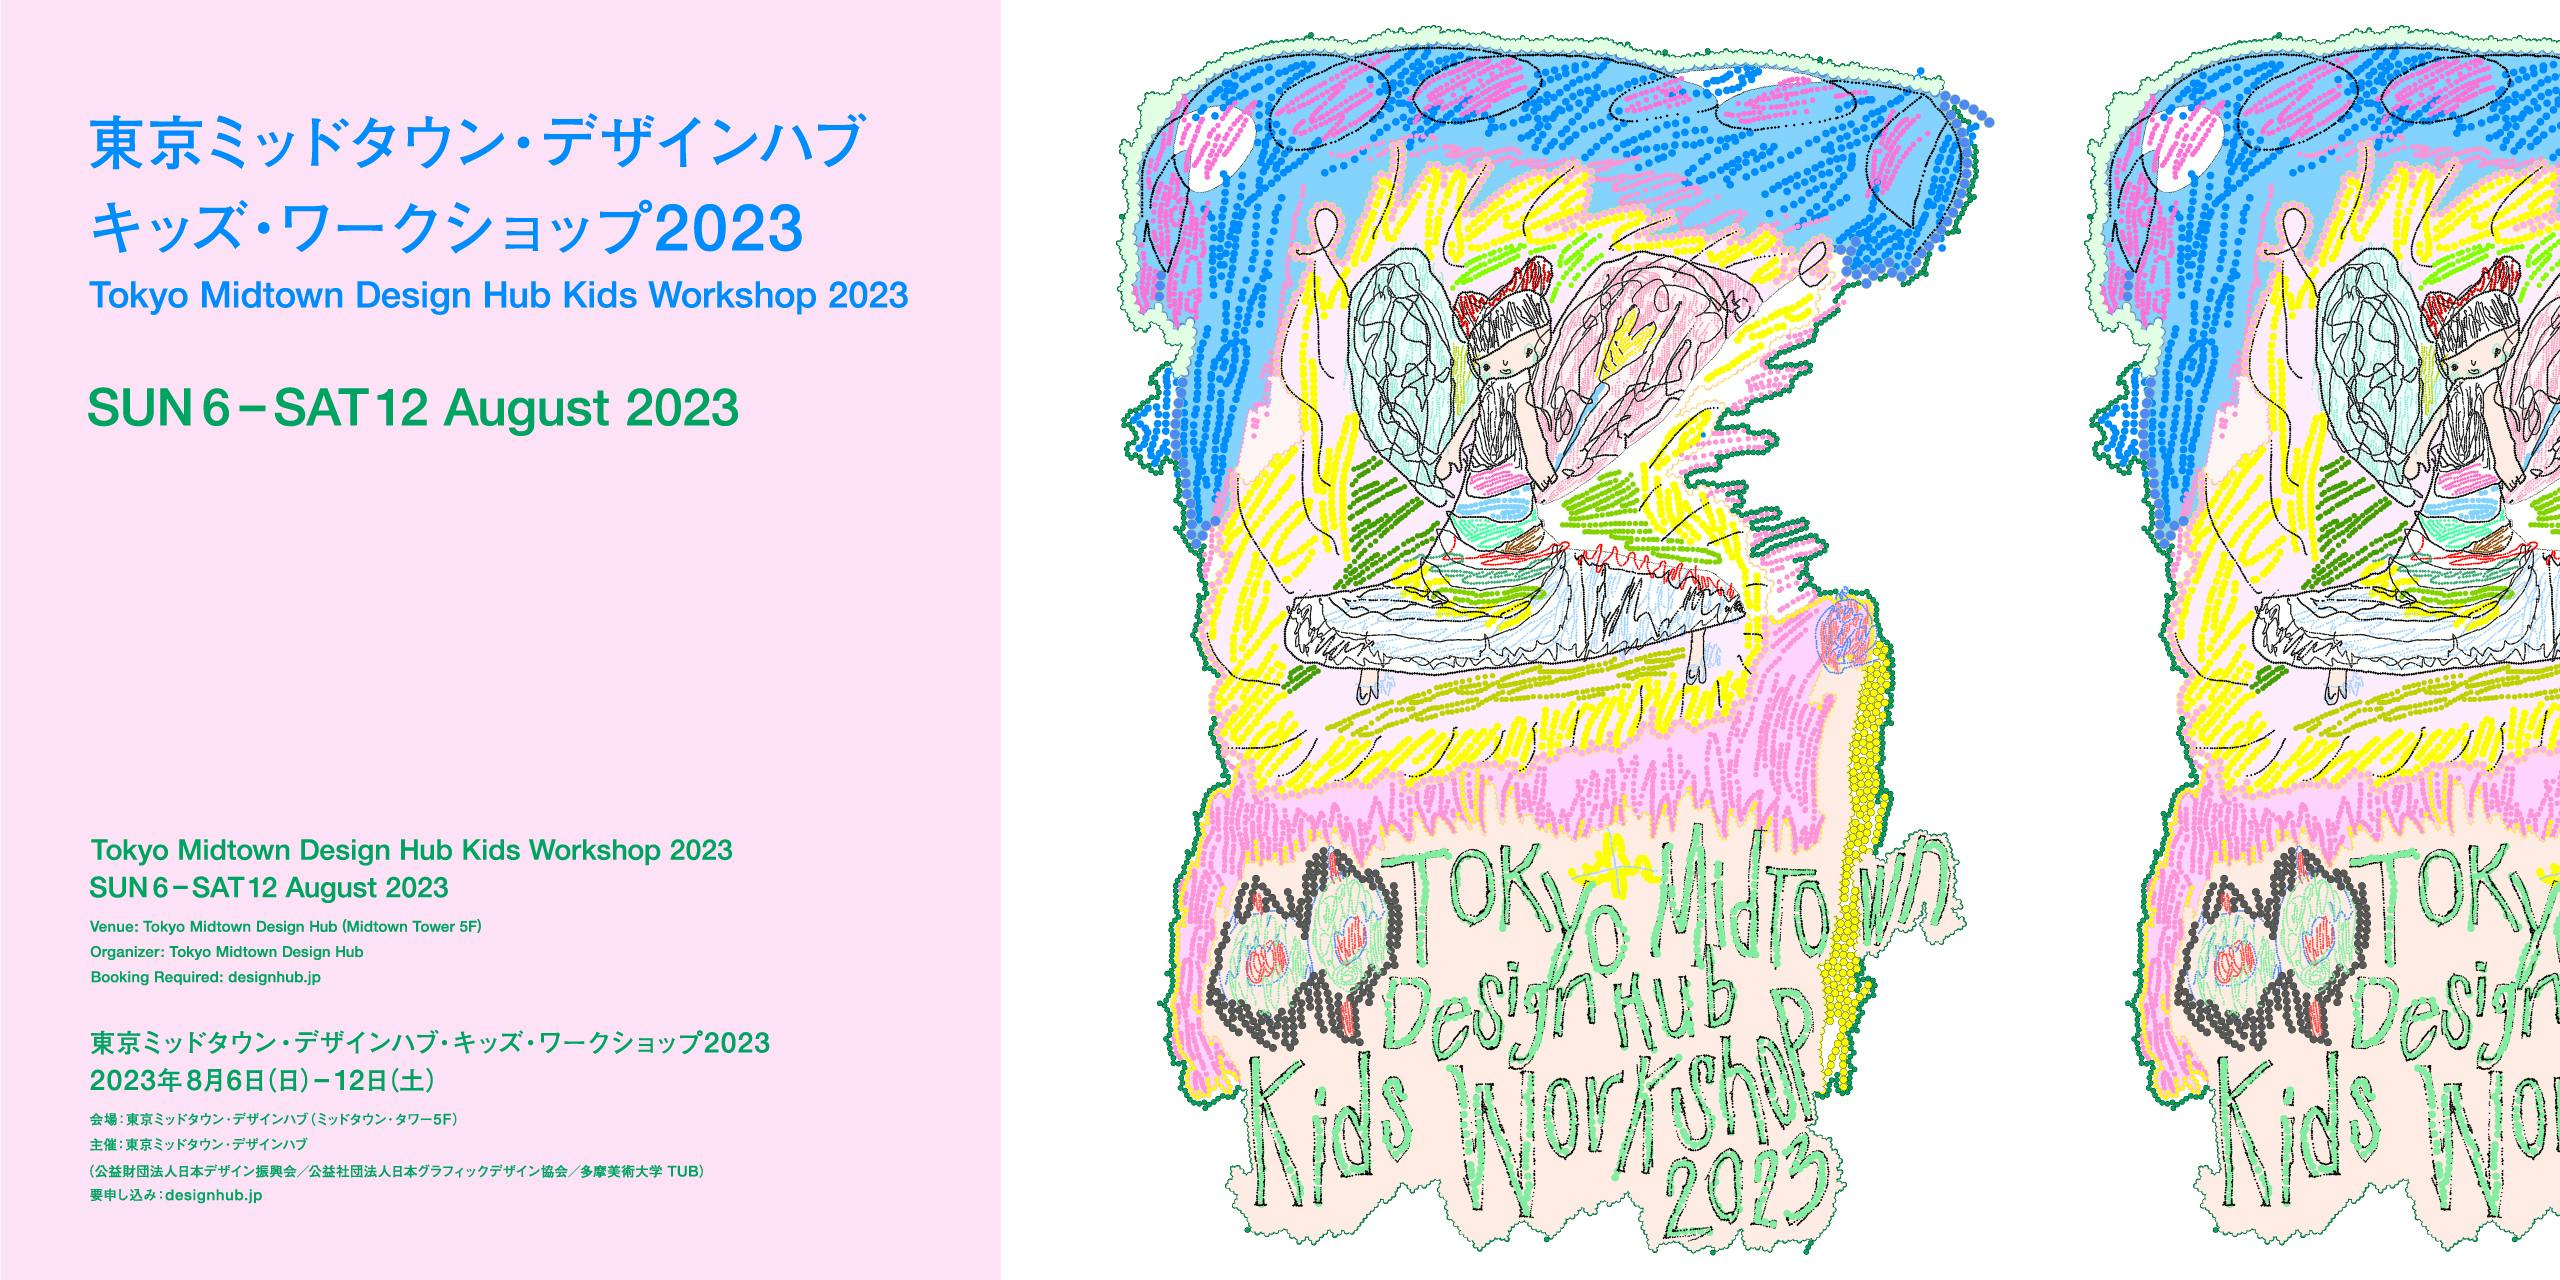 Tokyo Midtown Design Hub Kids Workshop 2023